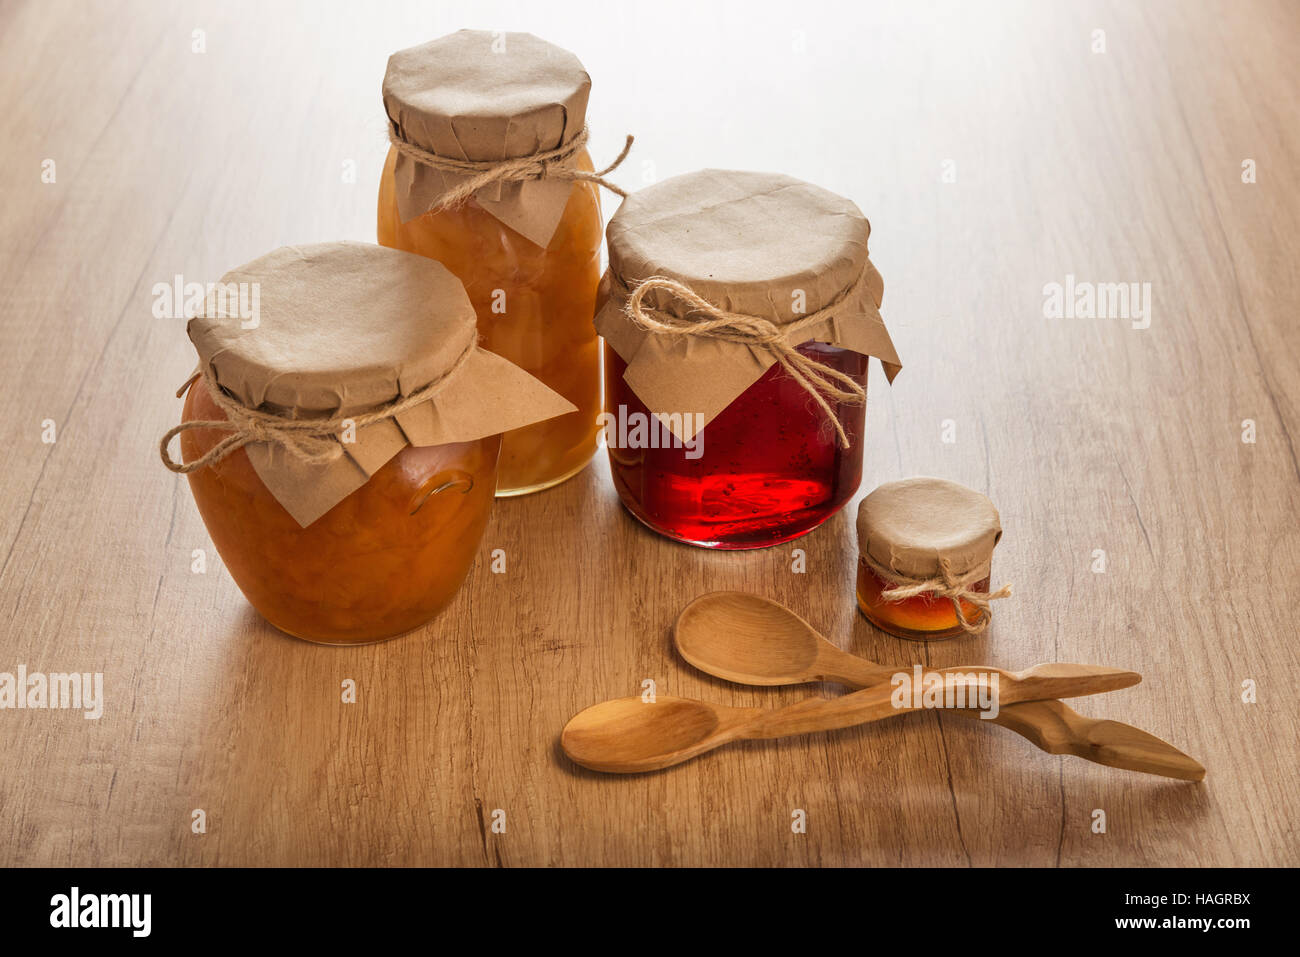 Dulce mermelada casera y cucharas sobre mesa de madera Foto de stock